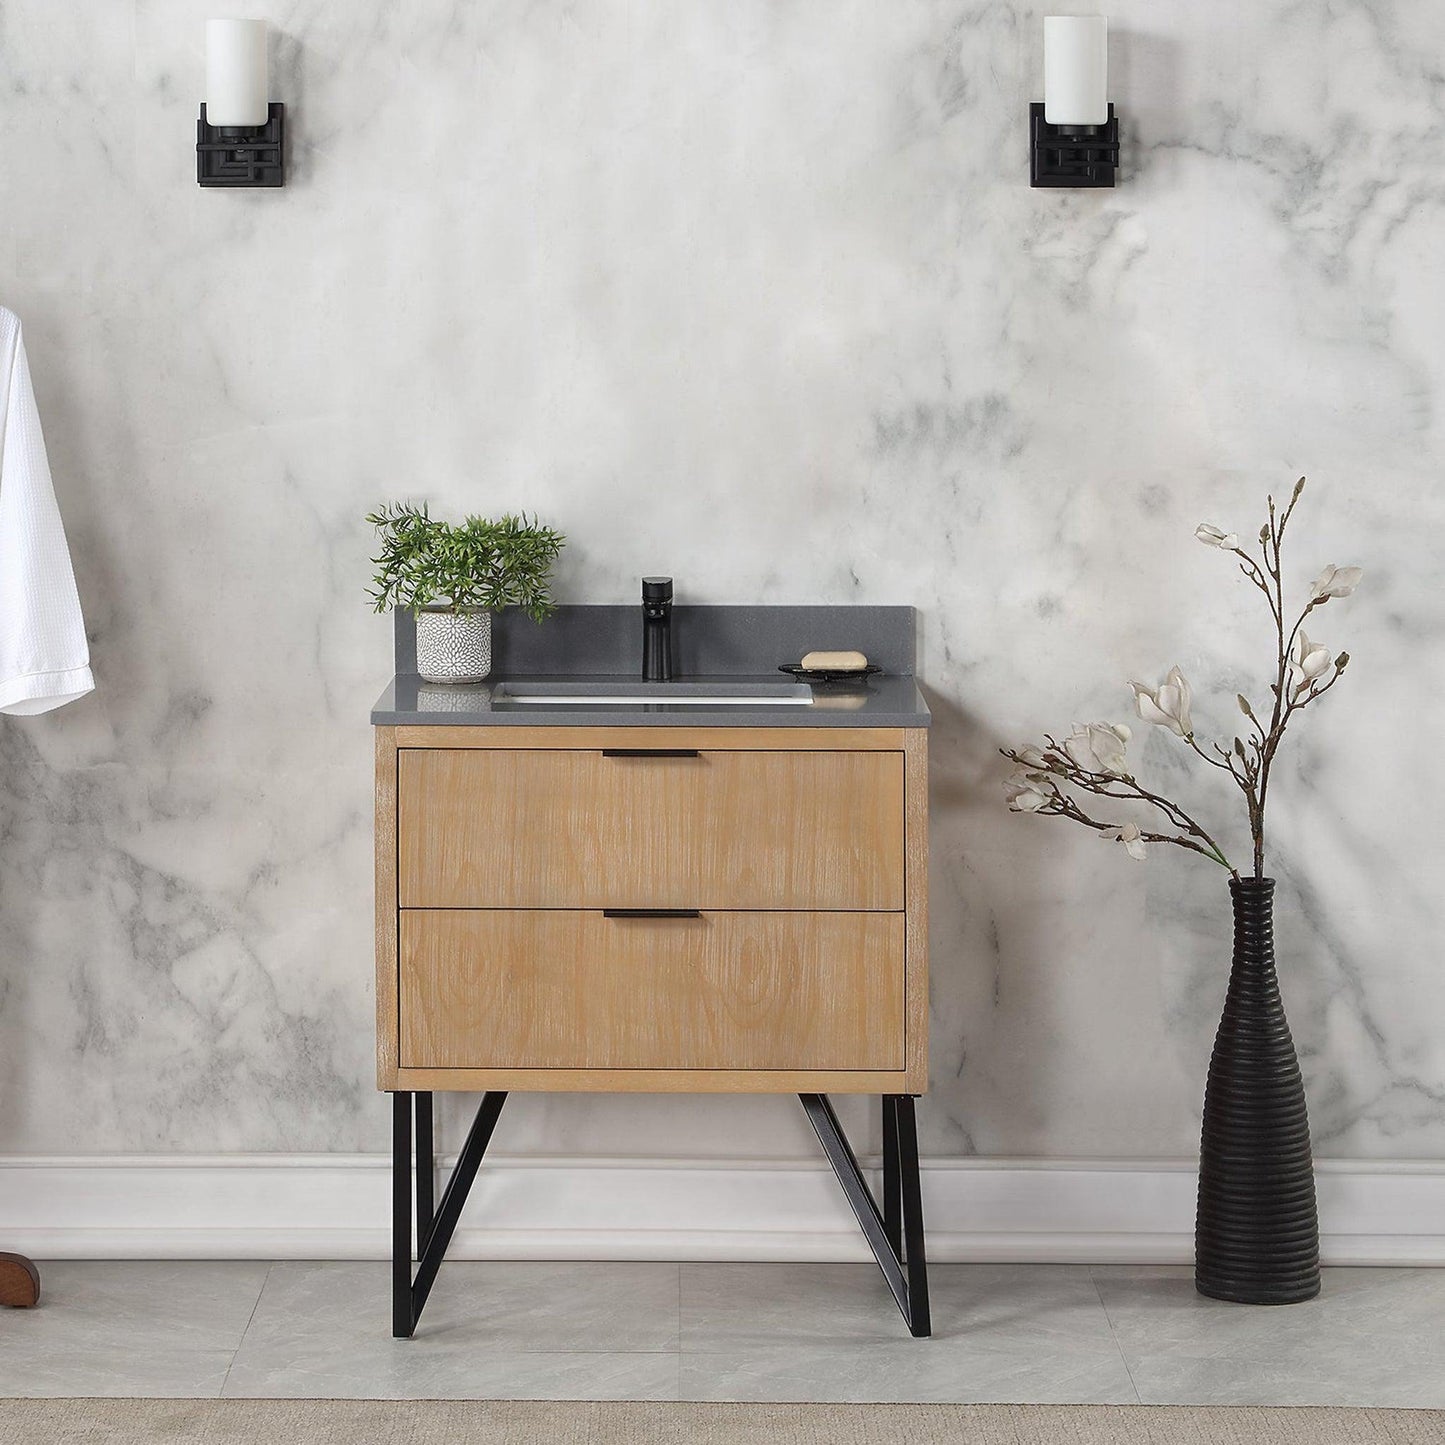 Altair Helios 30" Weathered Pine Freestanding Single Bathroom Vanity Set With Concrete Gray Composite Stone Top, Single Rectangular Undermount Ceramic Sink, Overflow, and Backsplash